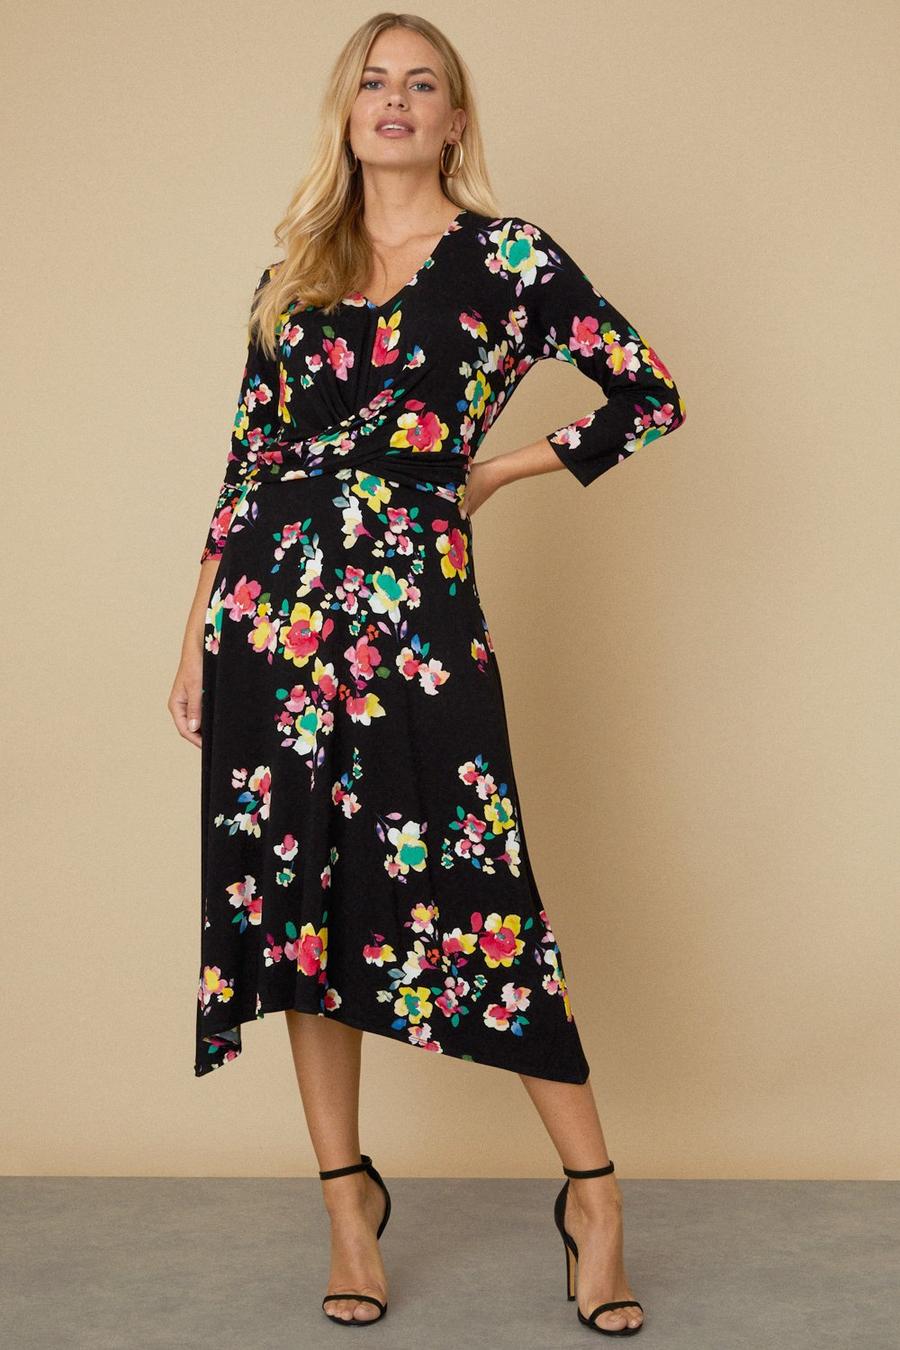 Petite Black Floral Twist Front Jersey Dress 